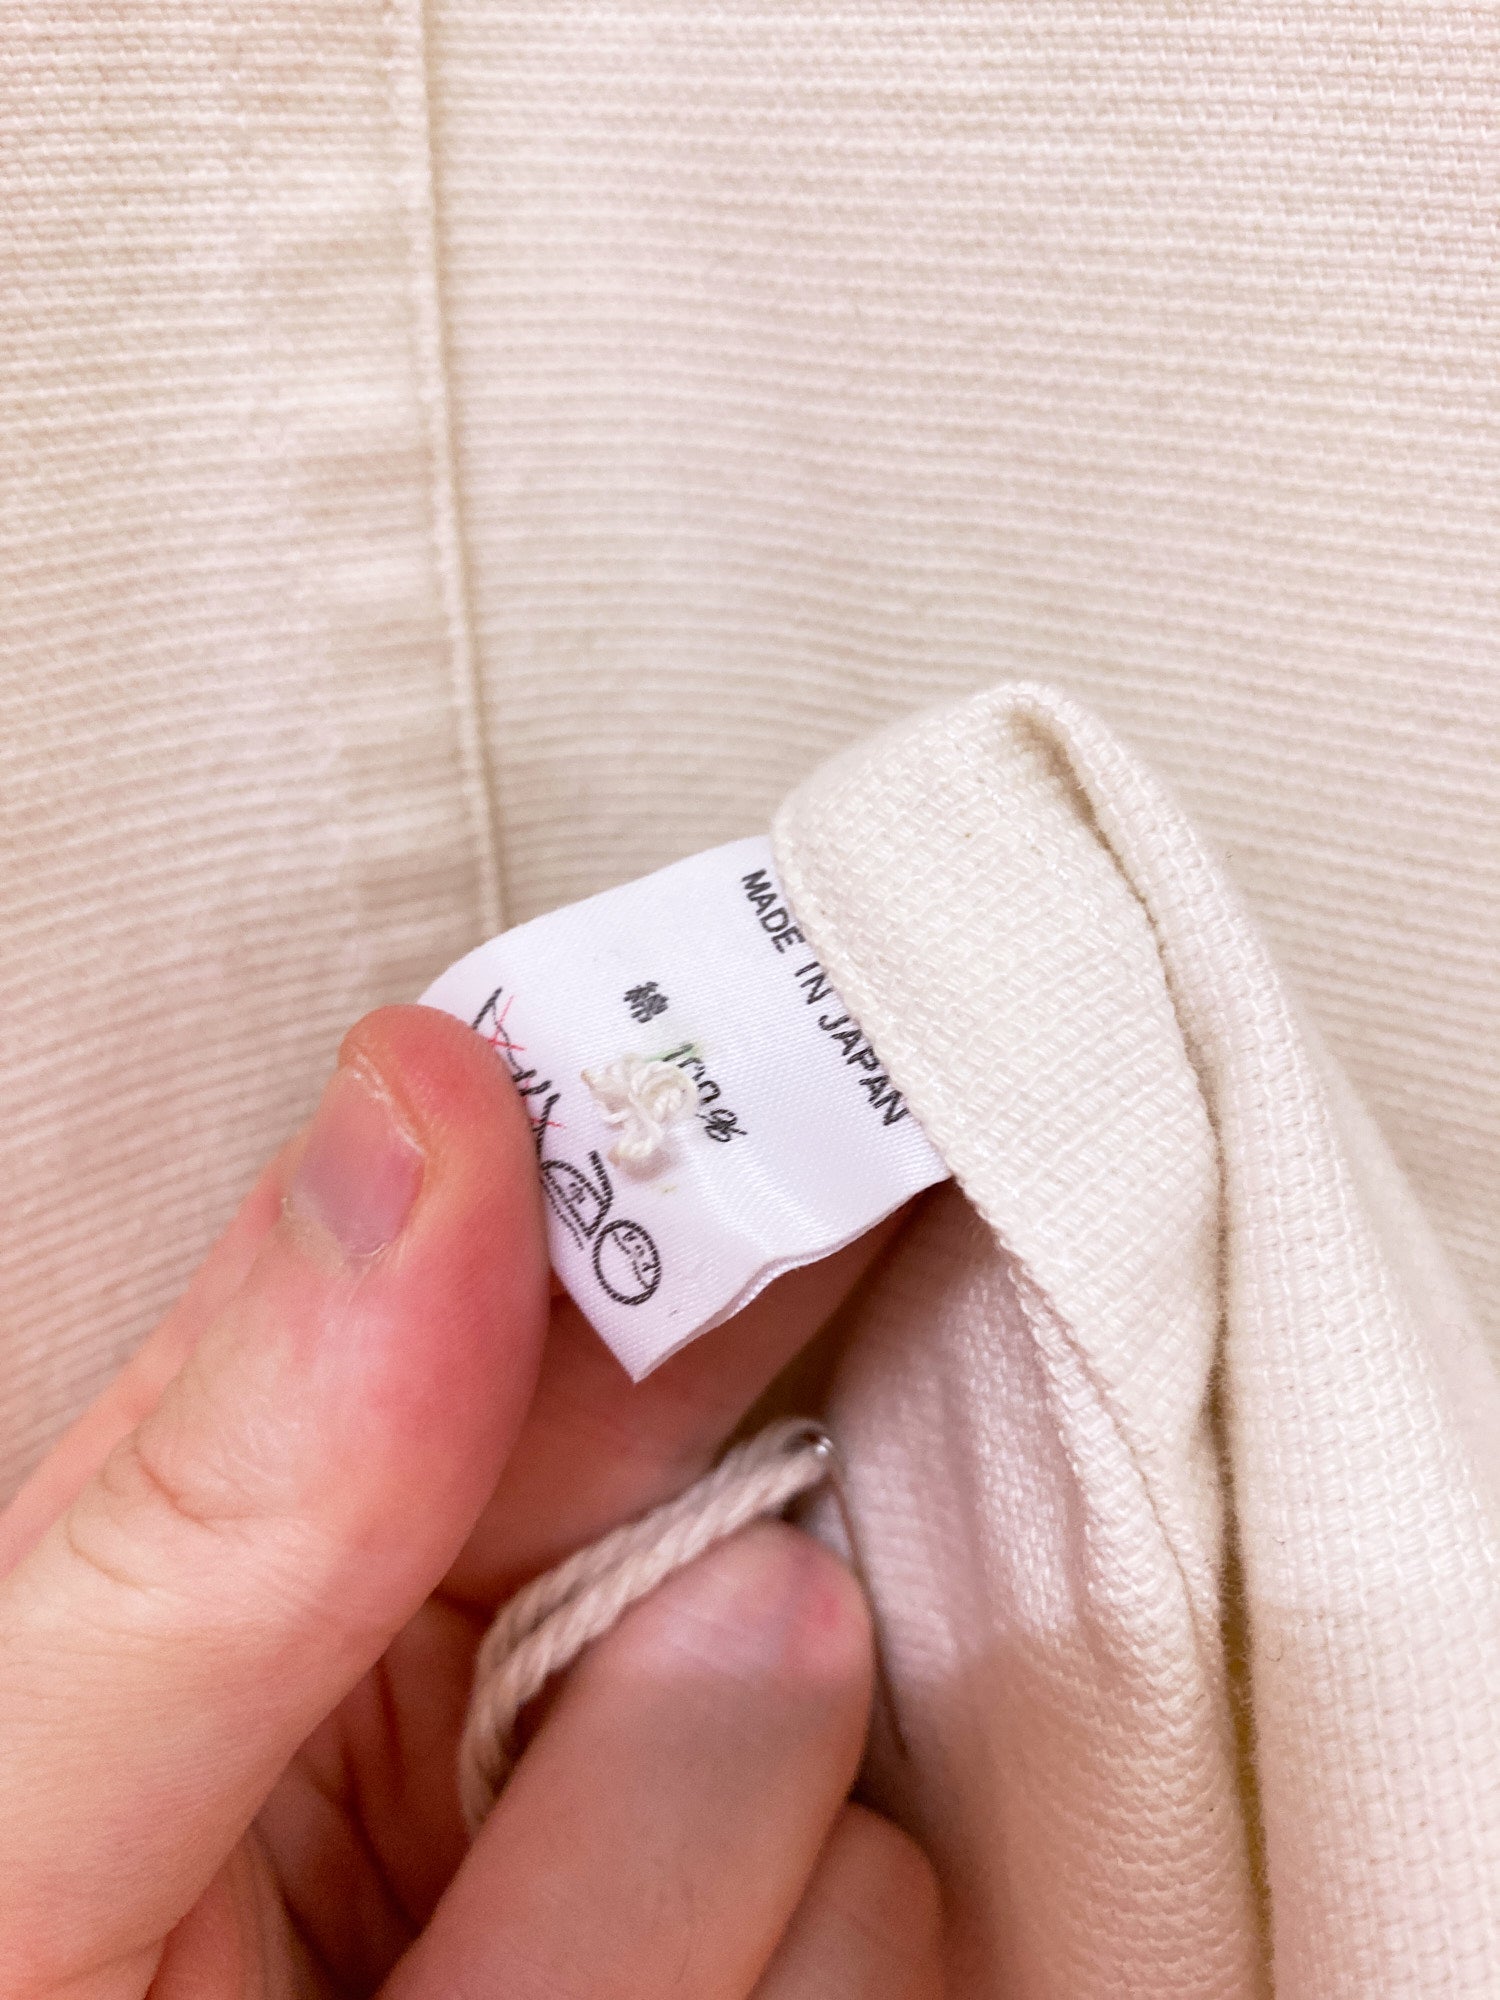 Y’s Yohji Yamamoto Workshop Cottoning 1980s unbleached cotton chore coat